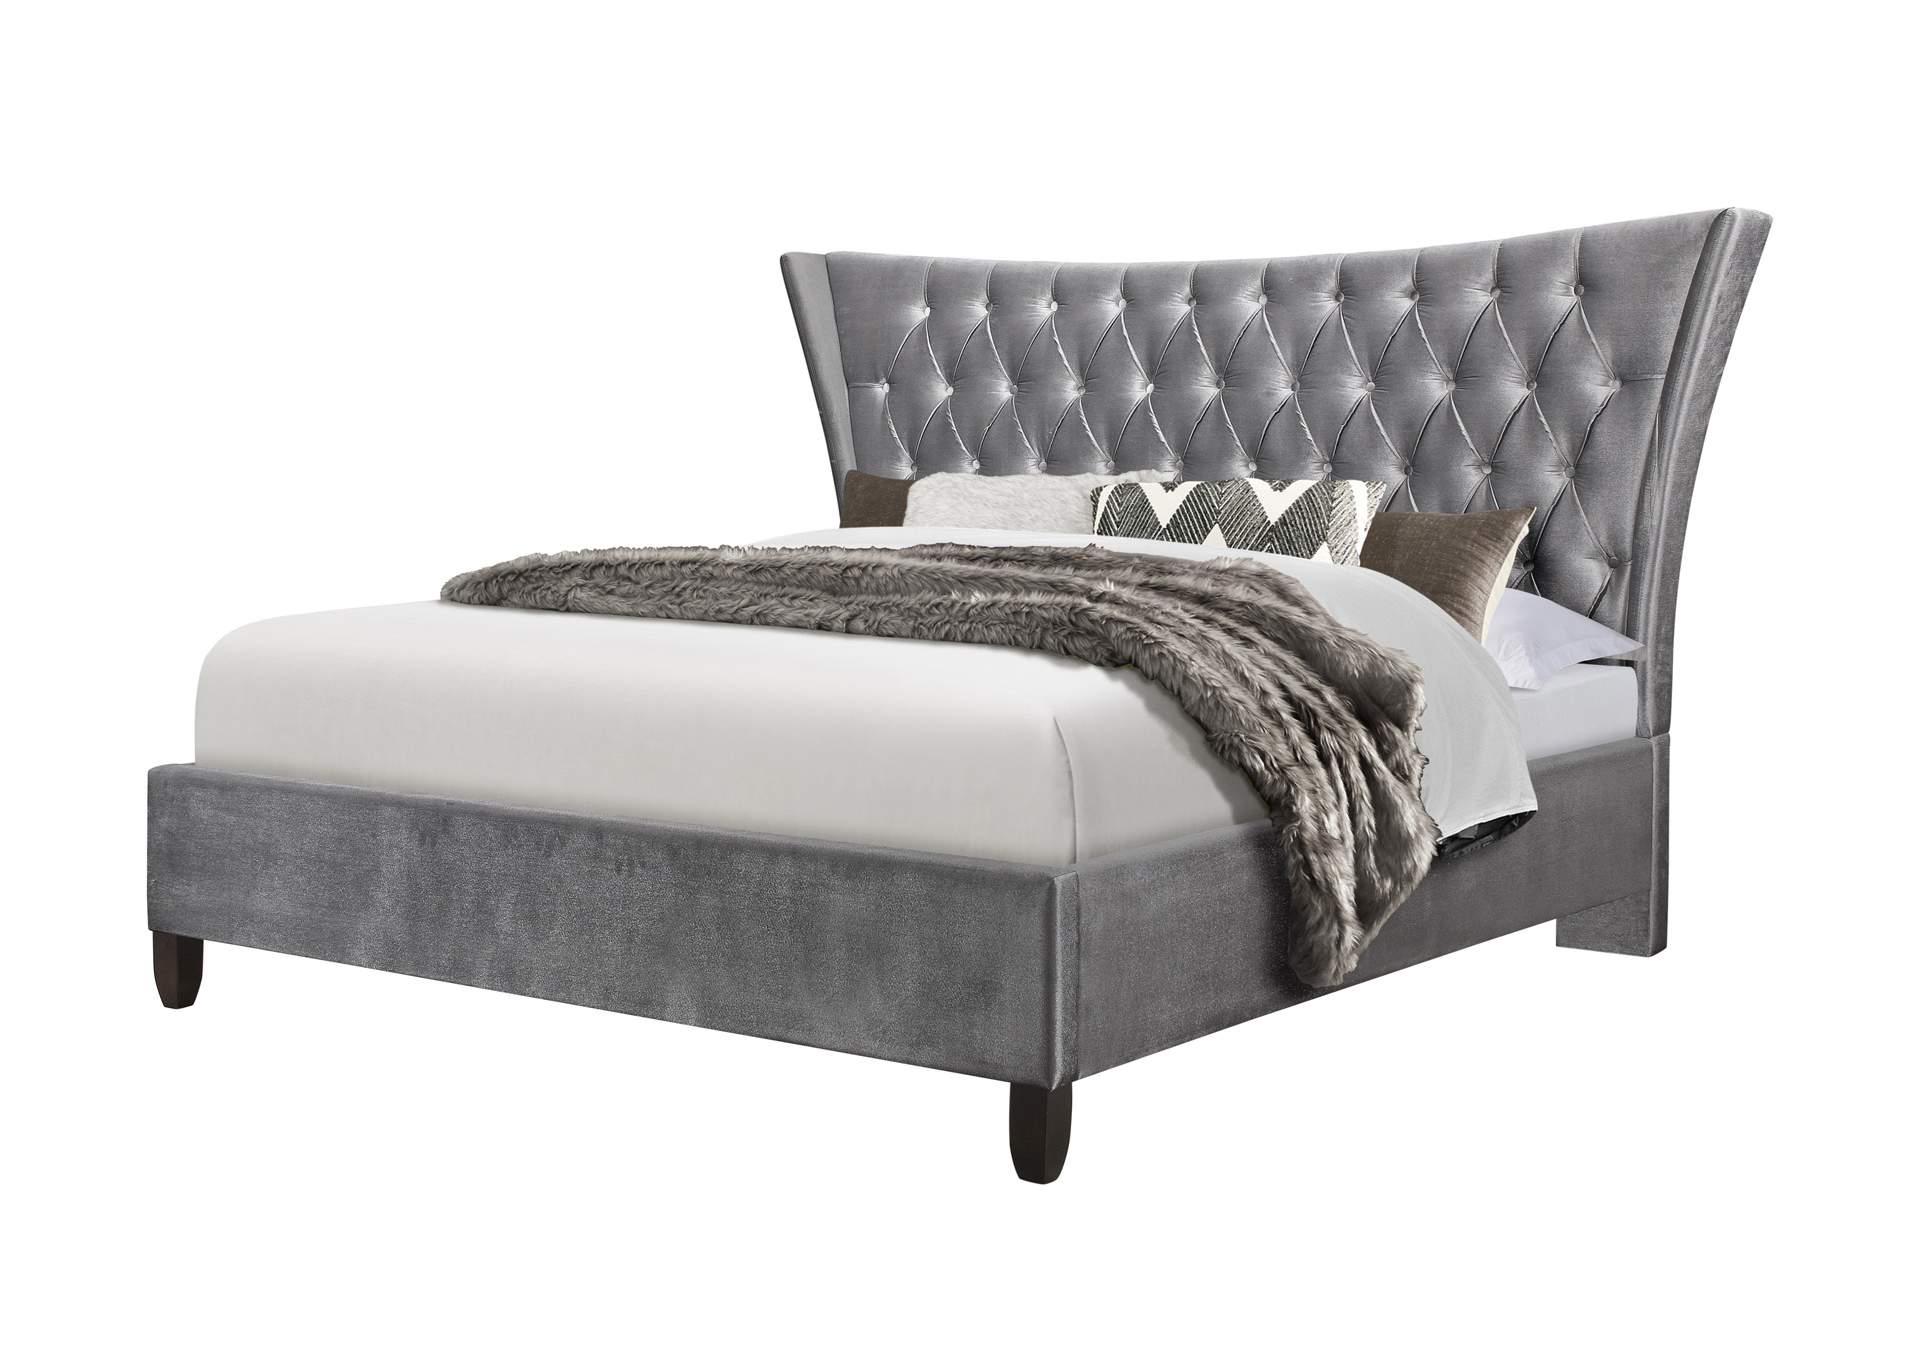 Silver King Bed,Global Furniture USA